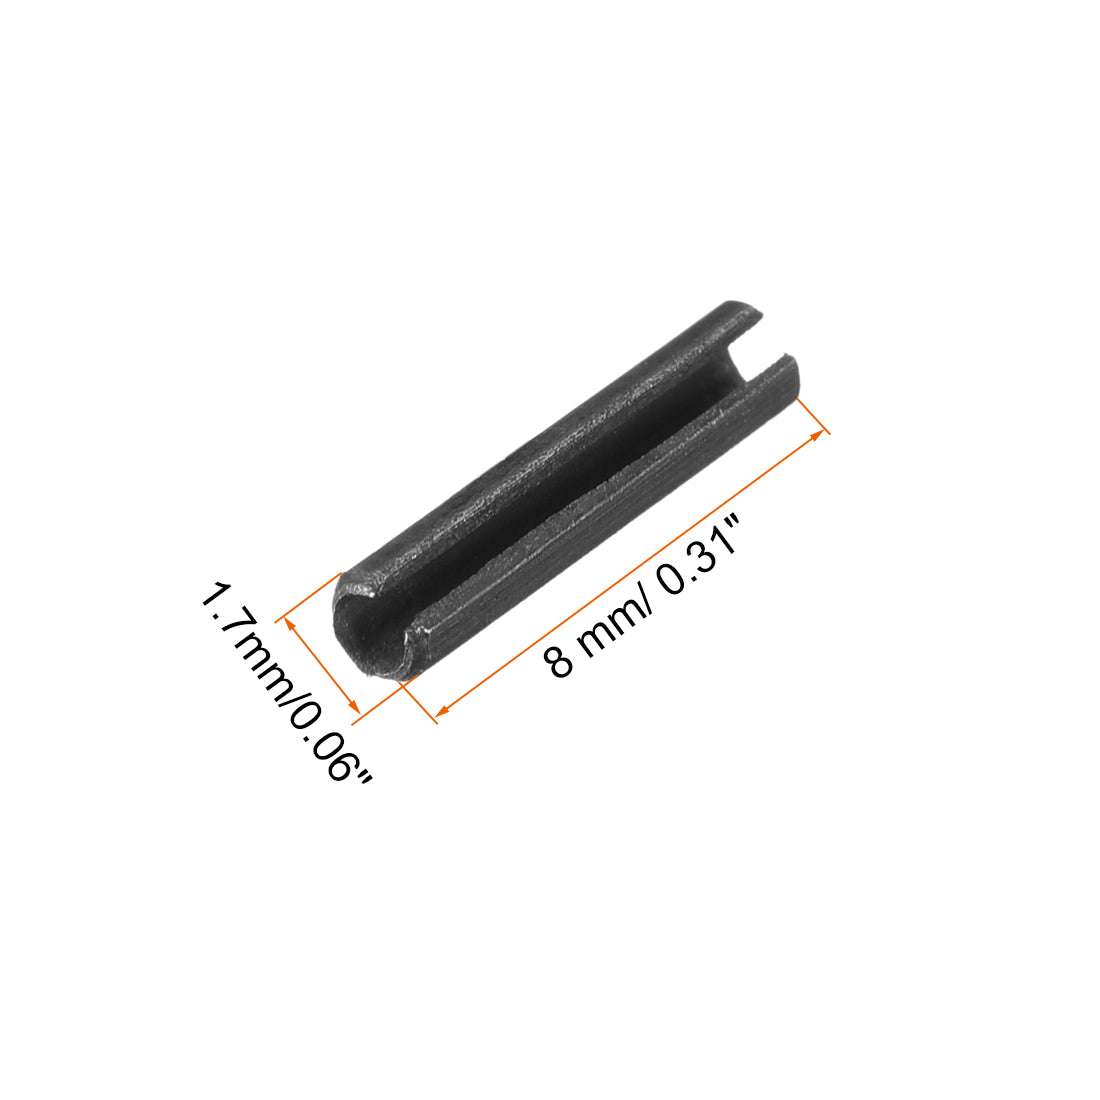 uxcell Uxcell 1.7mm x 8mm Dowel Pin Carbon Steel Split Spring Roll Shelf Support Pin Fasten Hardware Black 20 Pcs